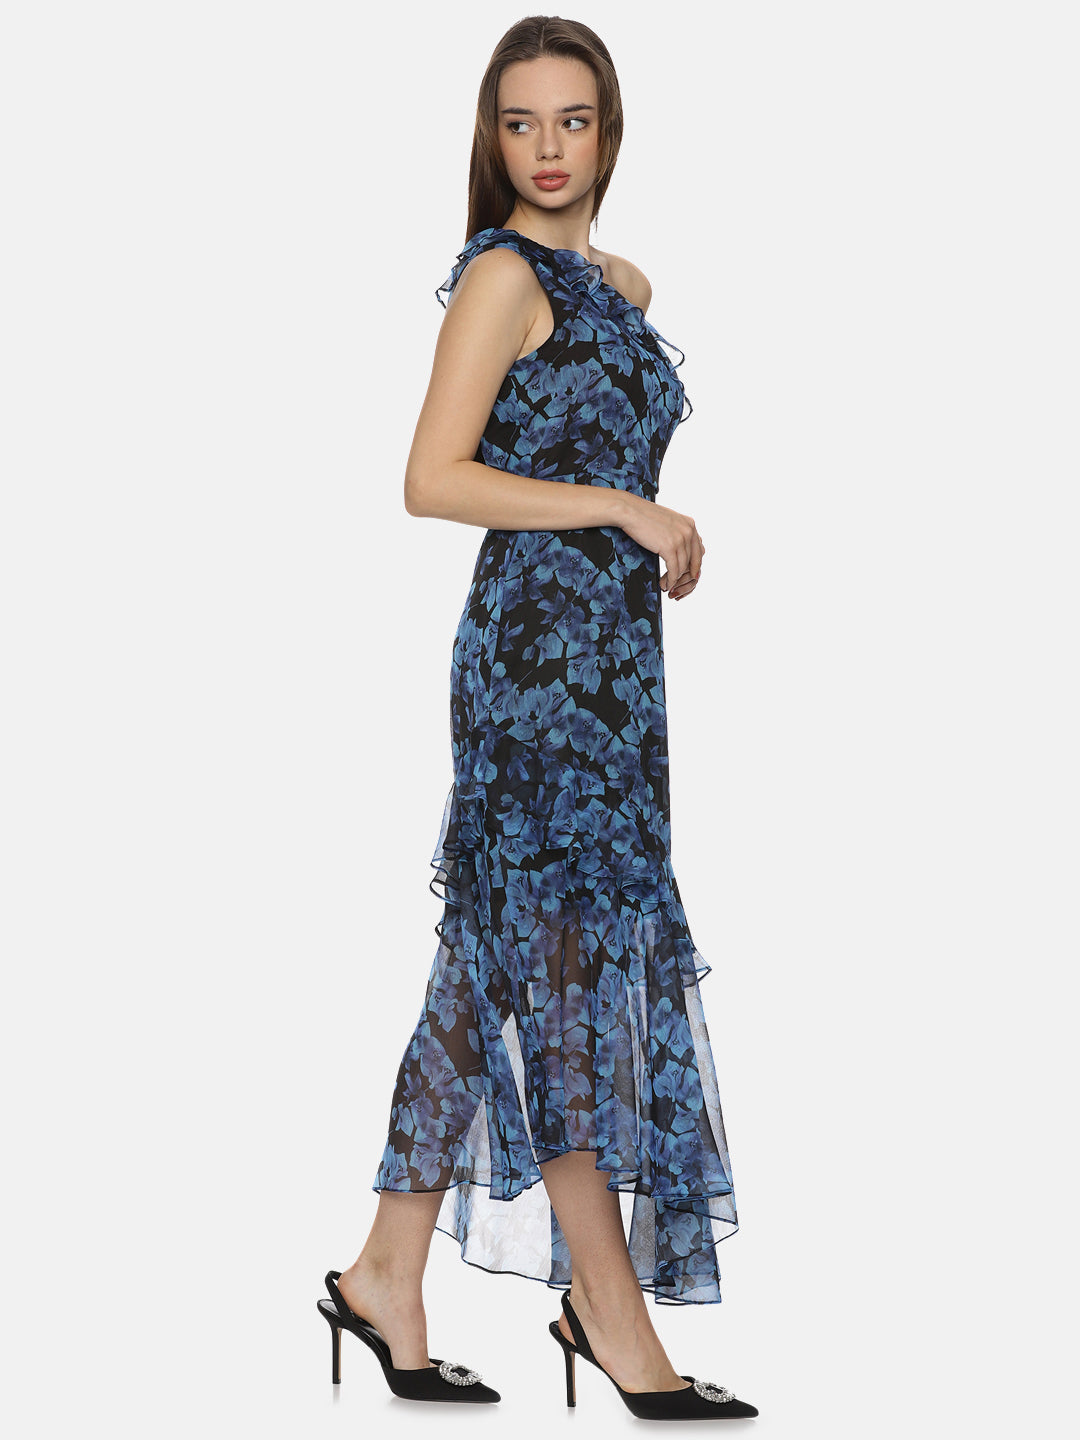 IS.U Floral Blue One Shoulder Asymmetrical Dress